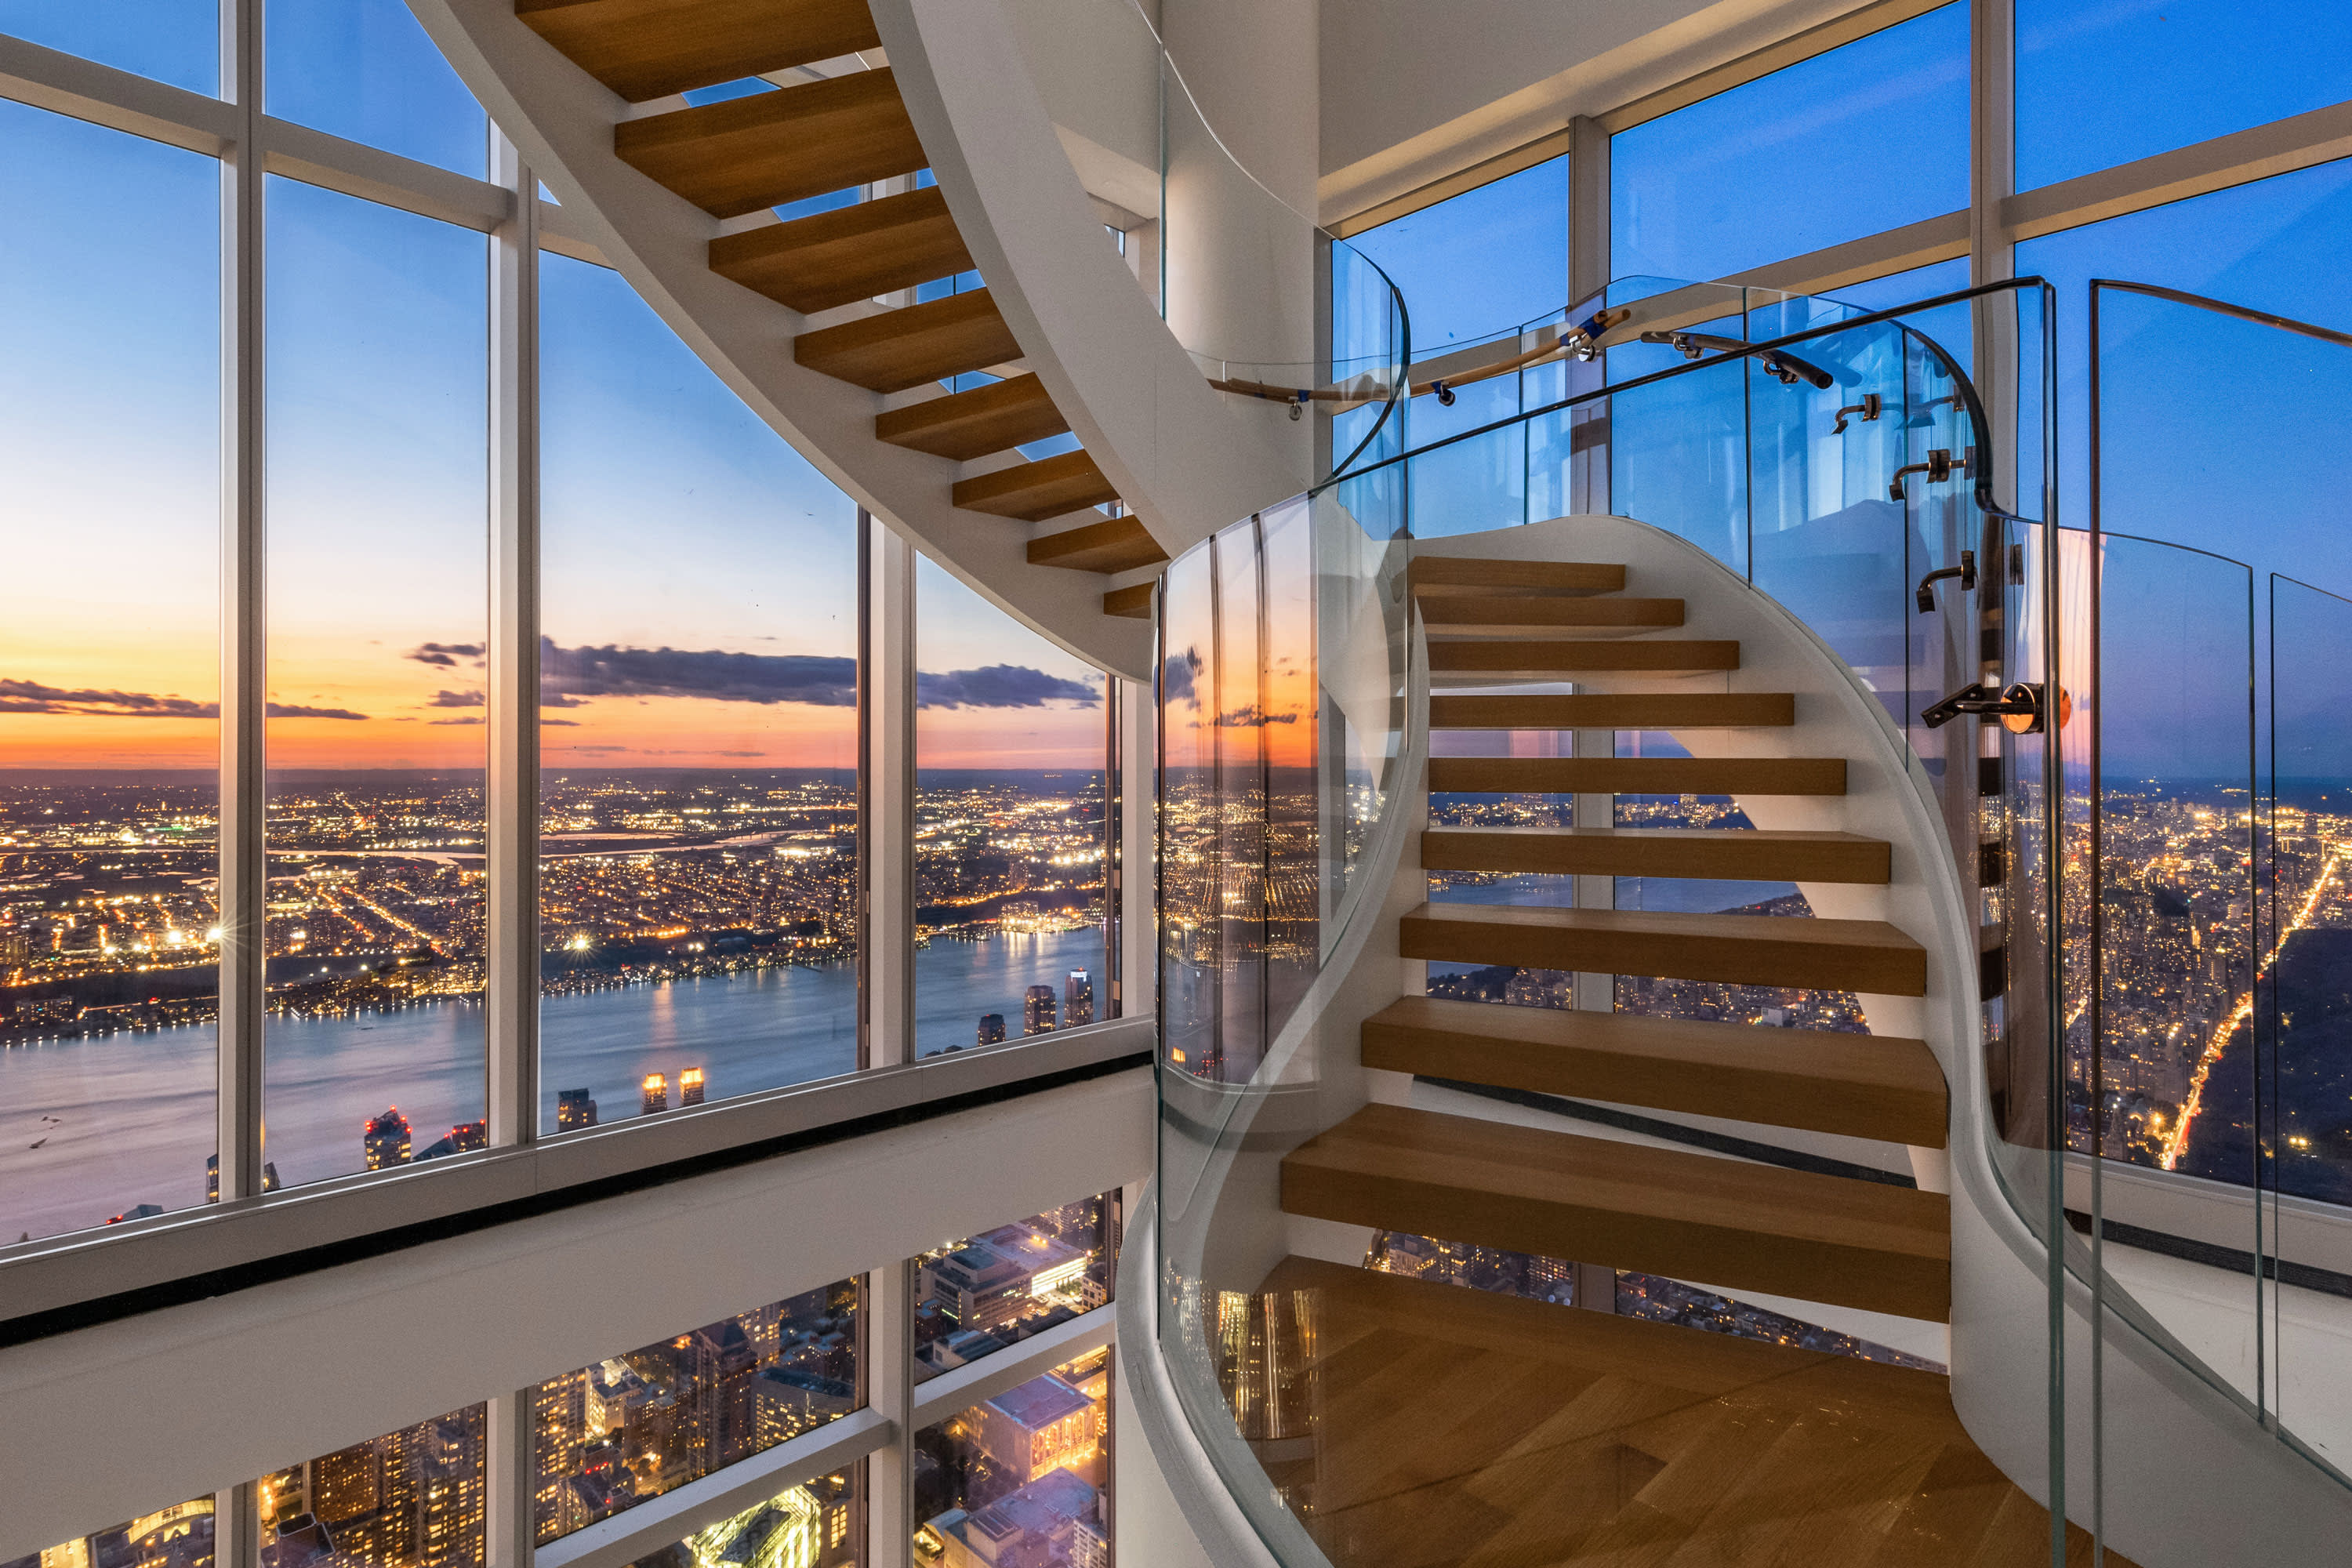 Inside the $250 million penthouse on 'Billionaires' Row